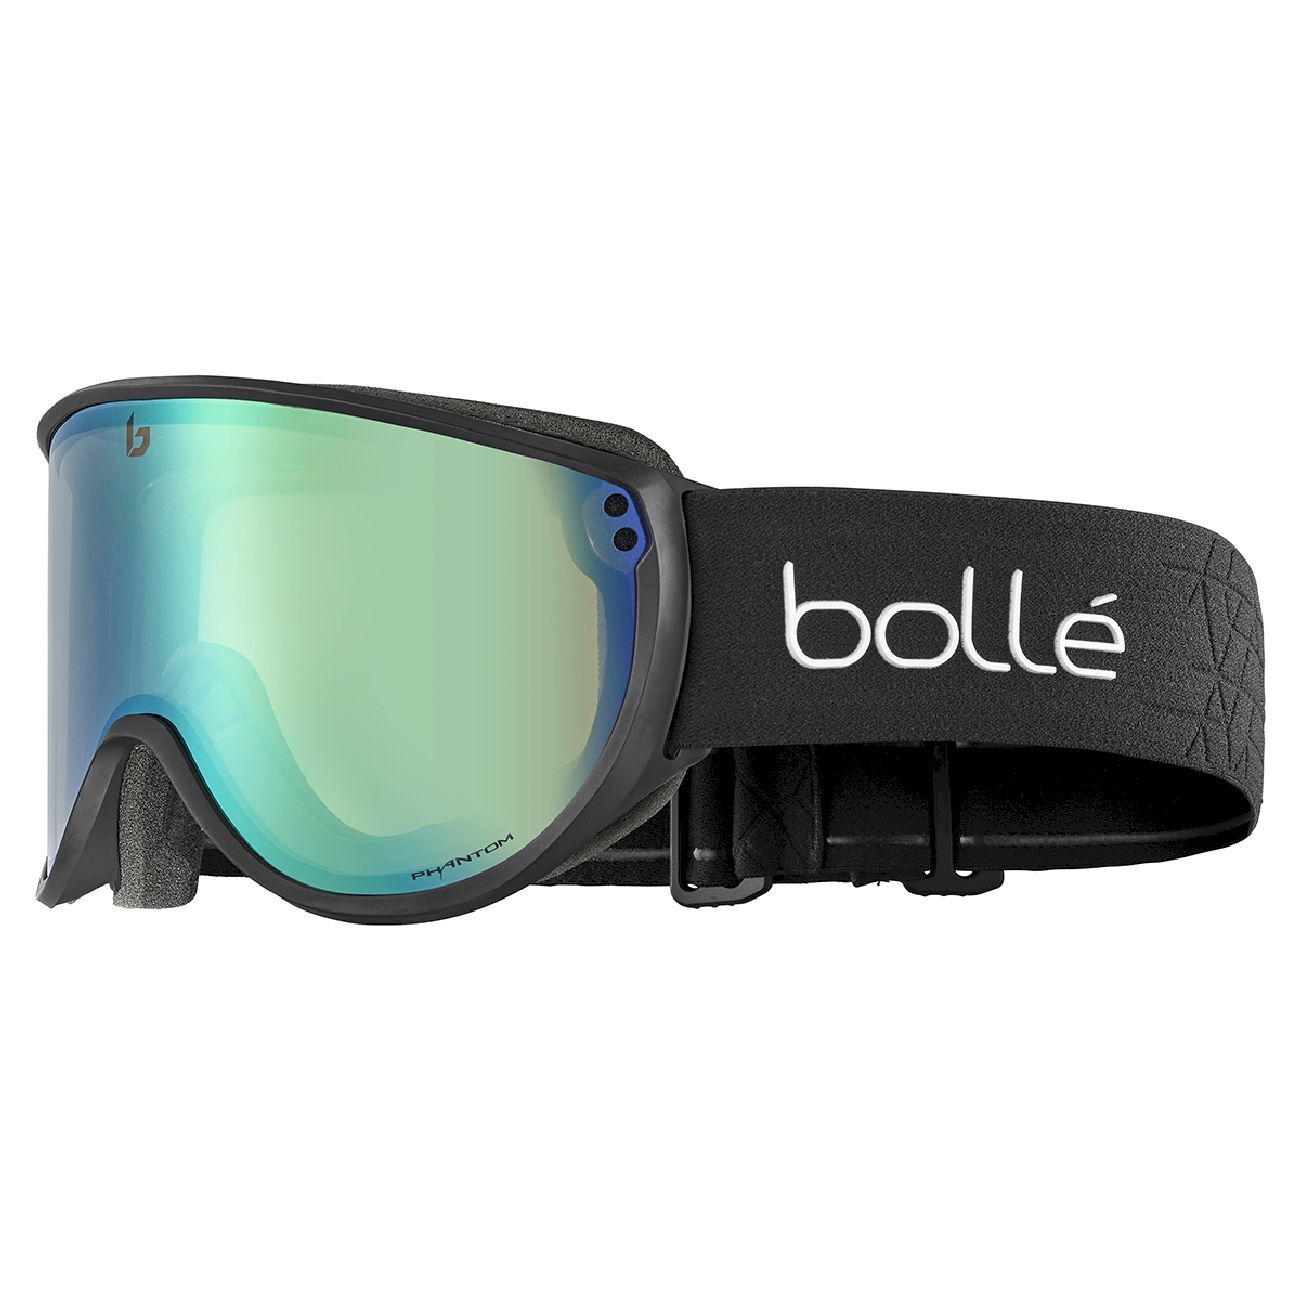 Bollé Blanca - Ski goggles